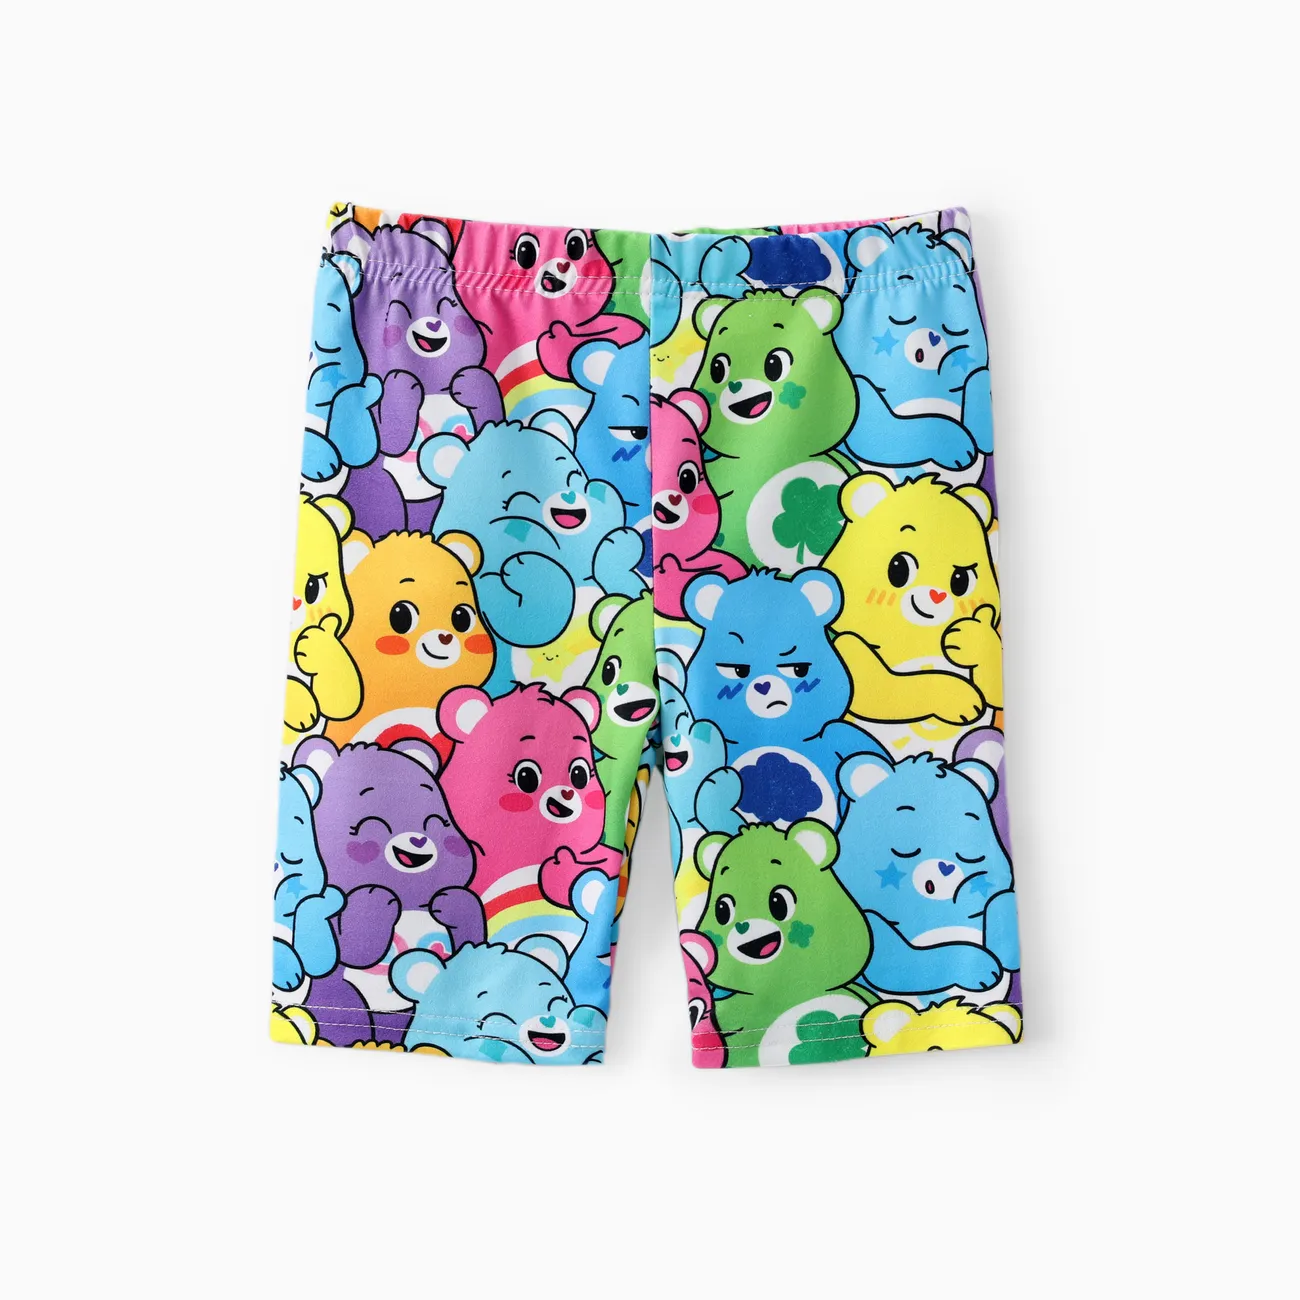 Care Bears Toddler Girls 2pcs Character Hear-pattern Print Ruffle-hem Top with Pants Set Multi-color big image 1